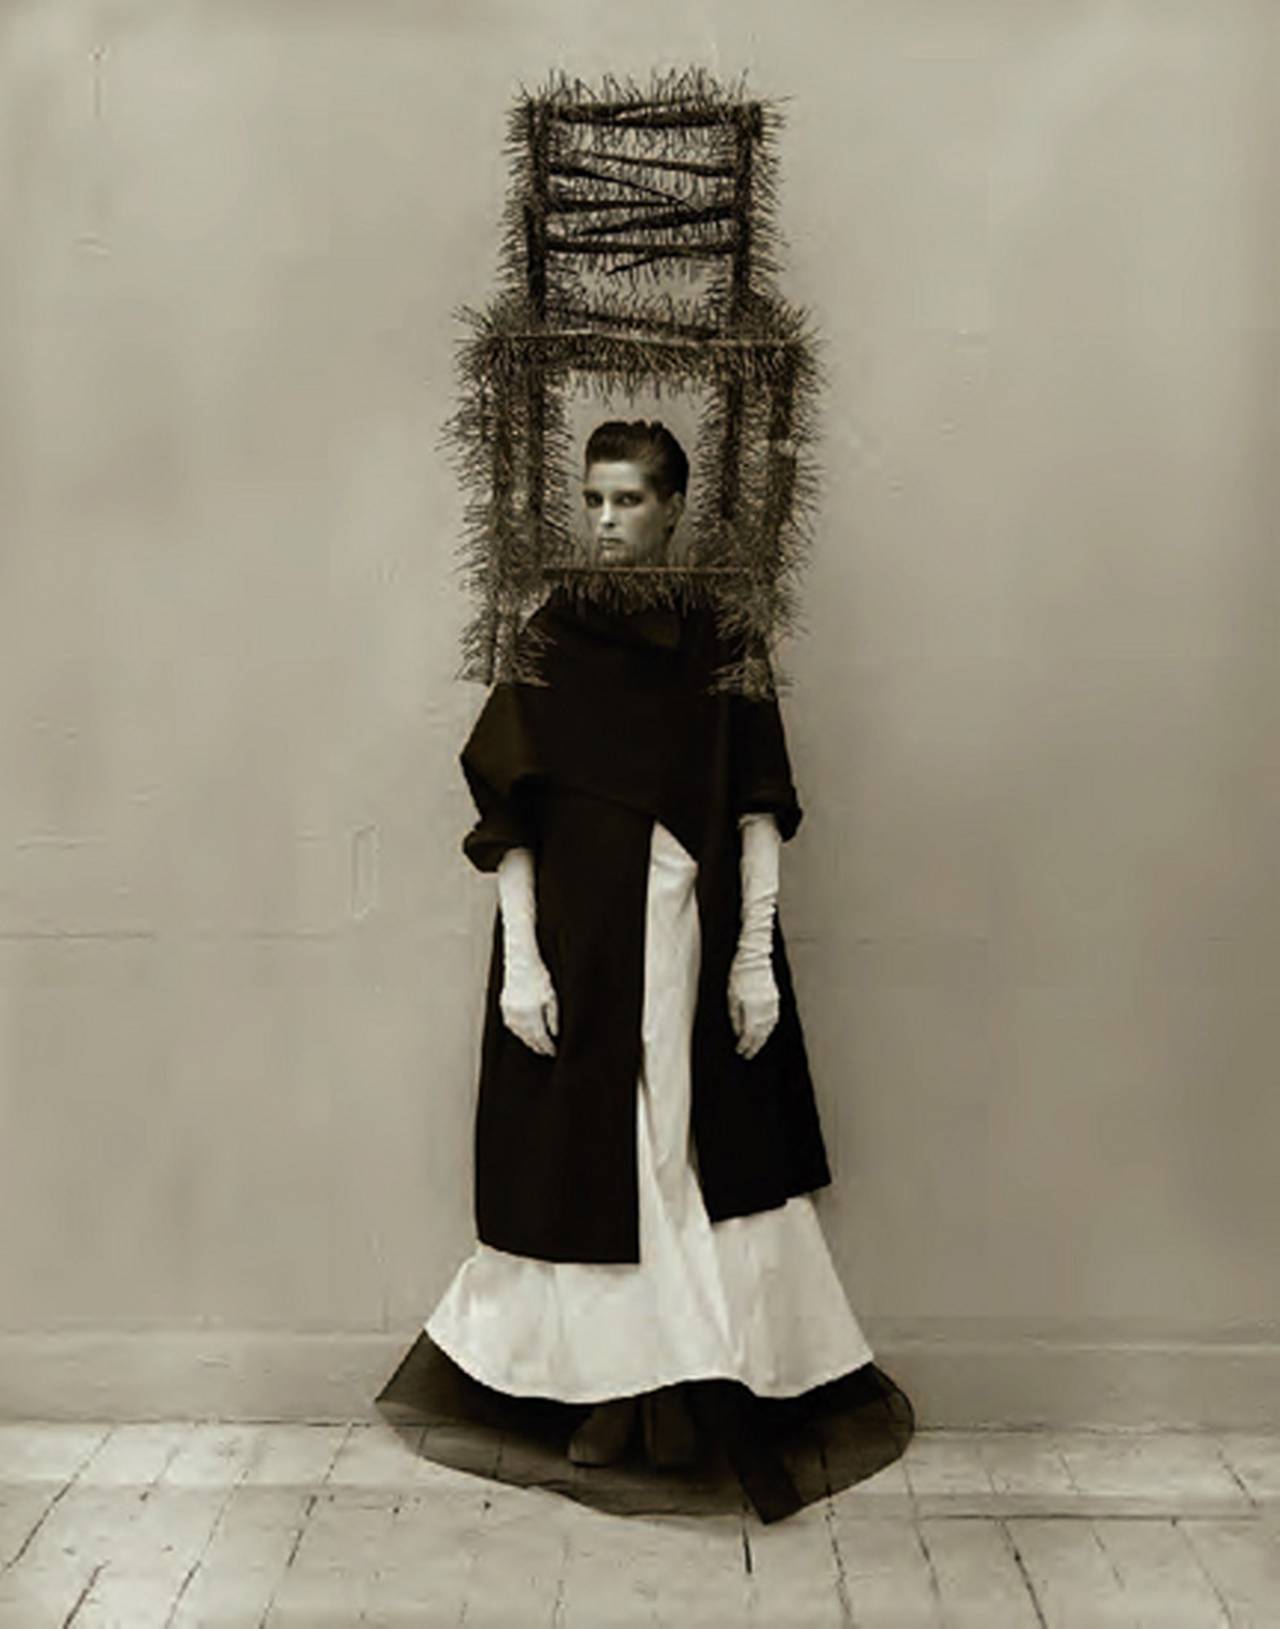 Albert Watson Black and White Photograph – Leslie Winer, Royal College of Art, London